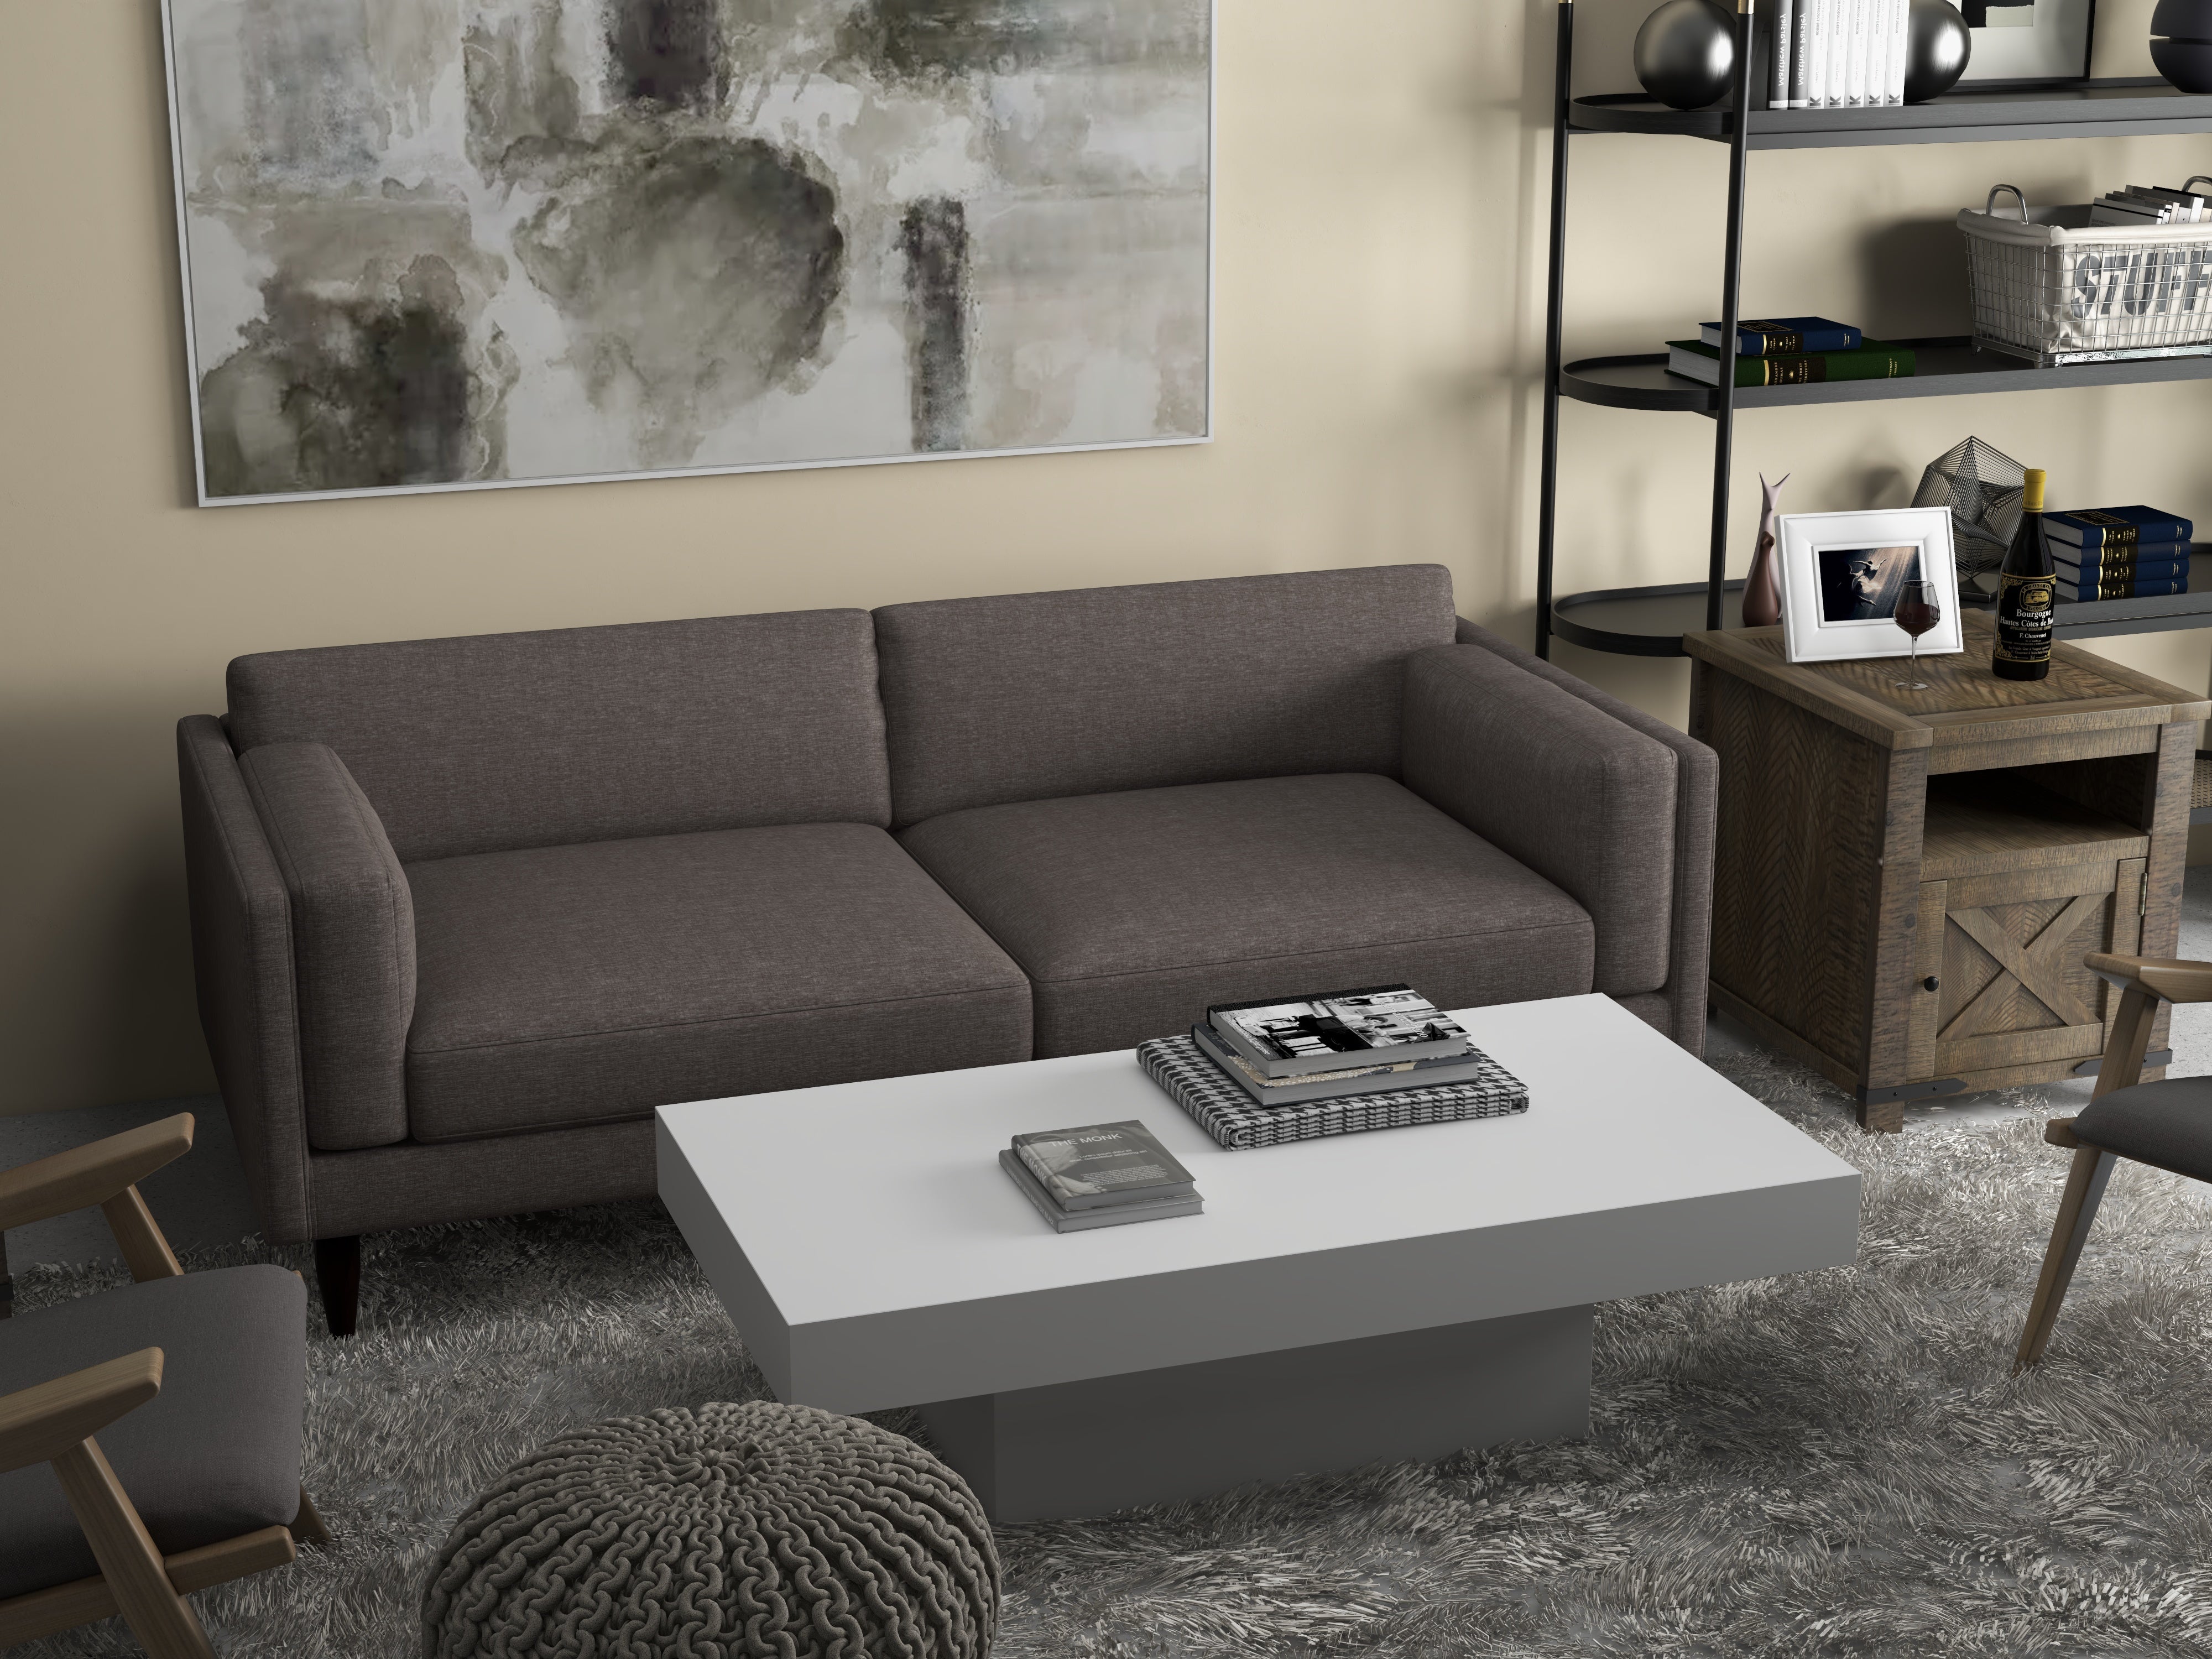 Davis Modern Wide Arm Cushion Couch - What A Room